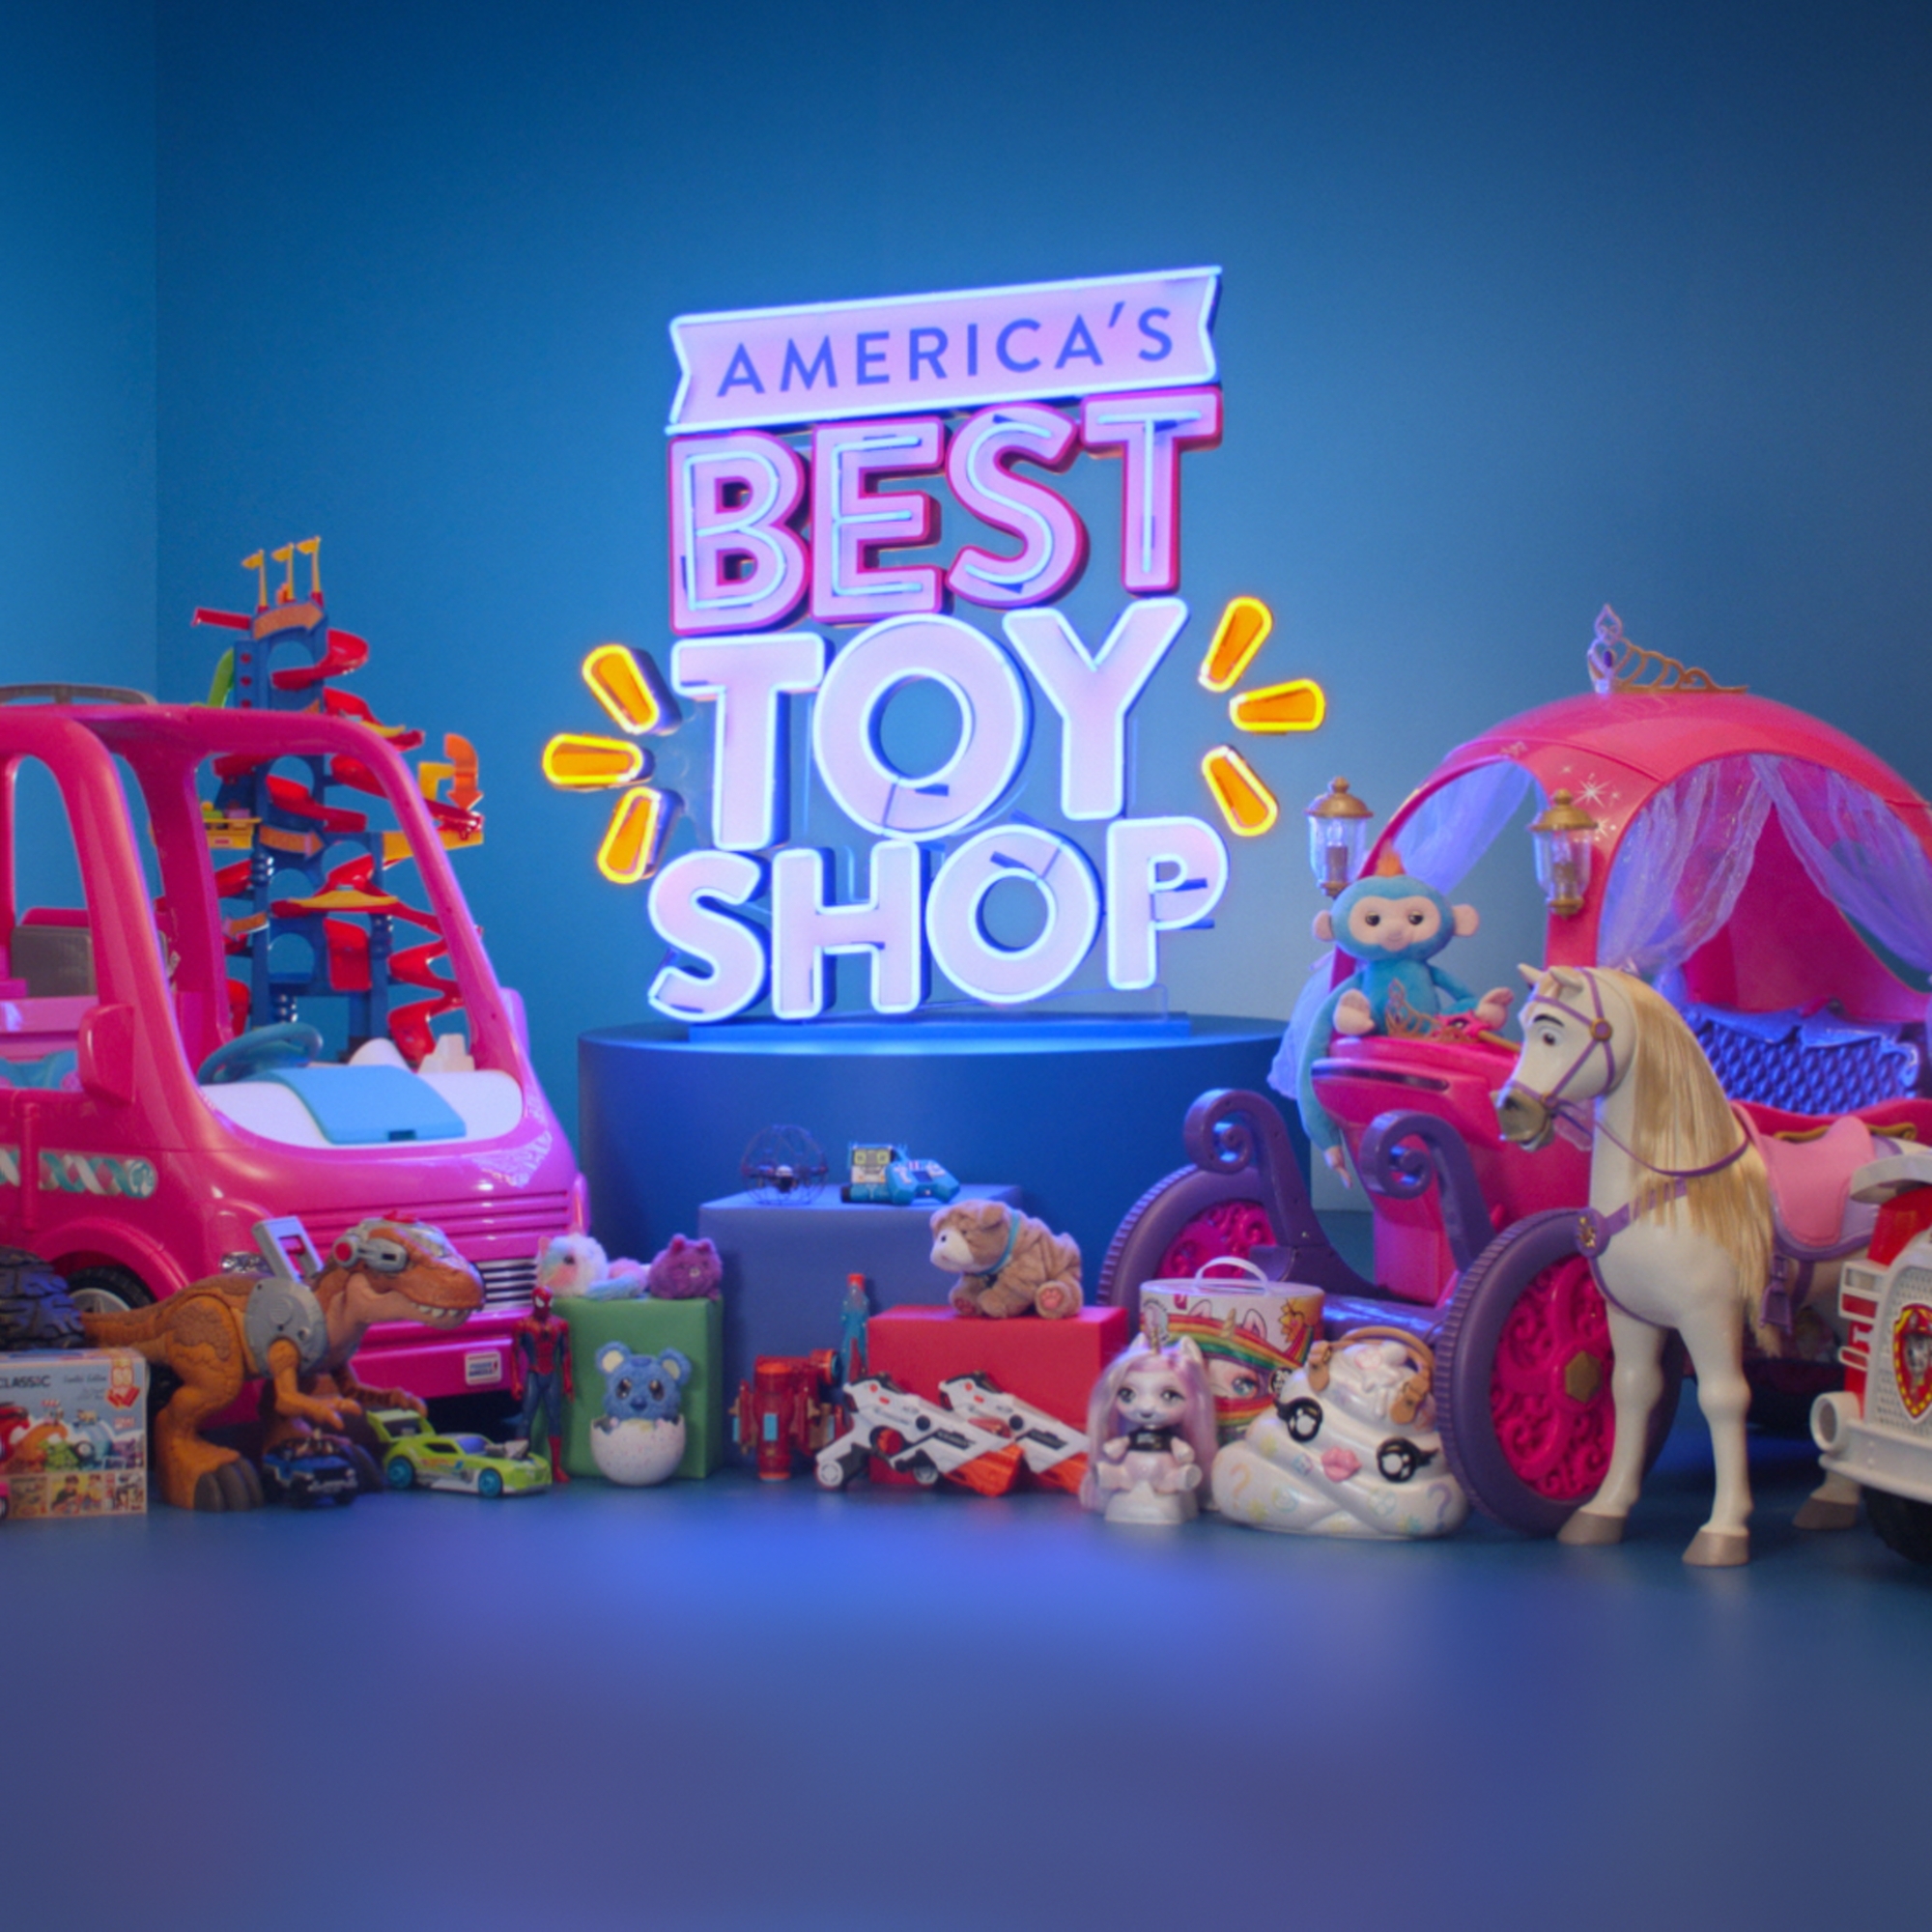 popular baby toy brands